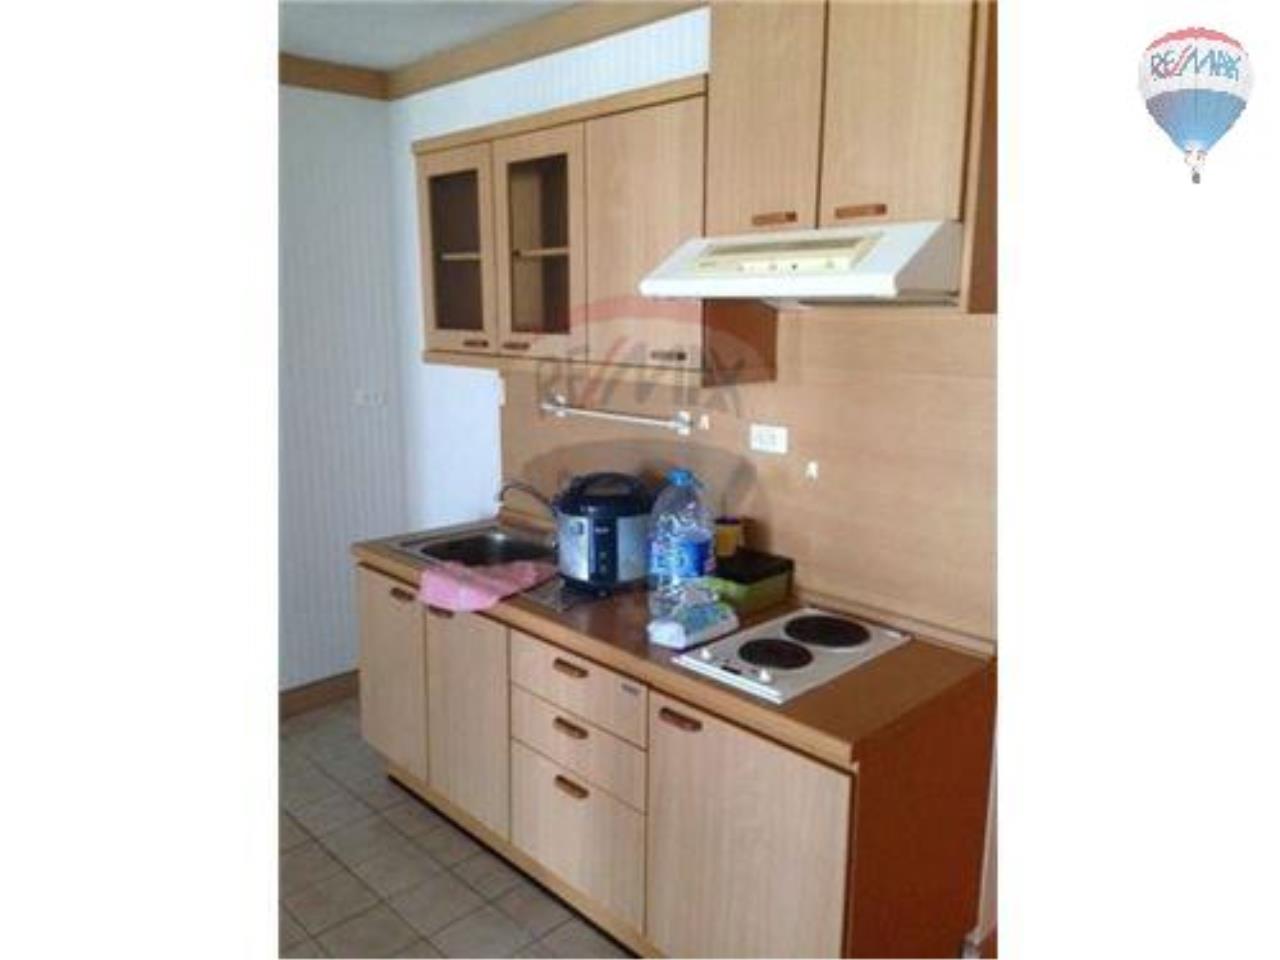 RE/MAX Properties Agency's 2 Bedroom Apartment - Sukhumvit 30/1 1